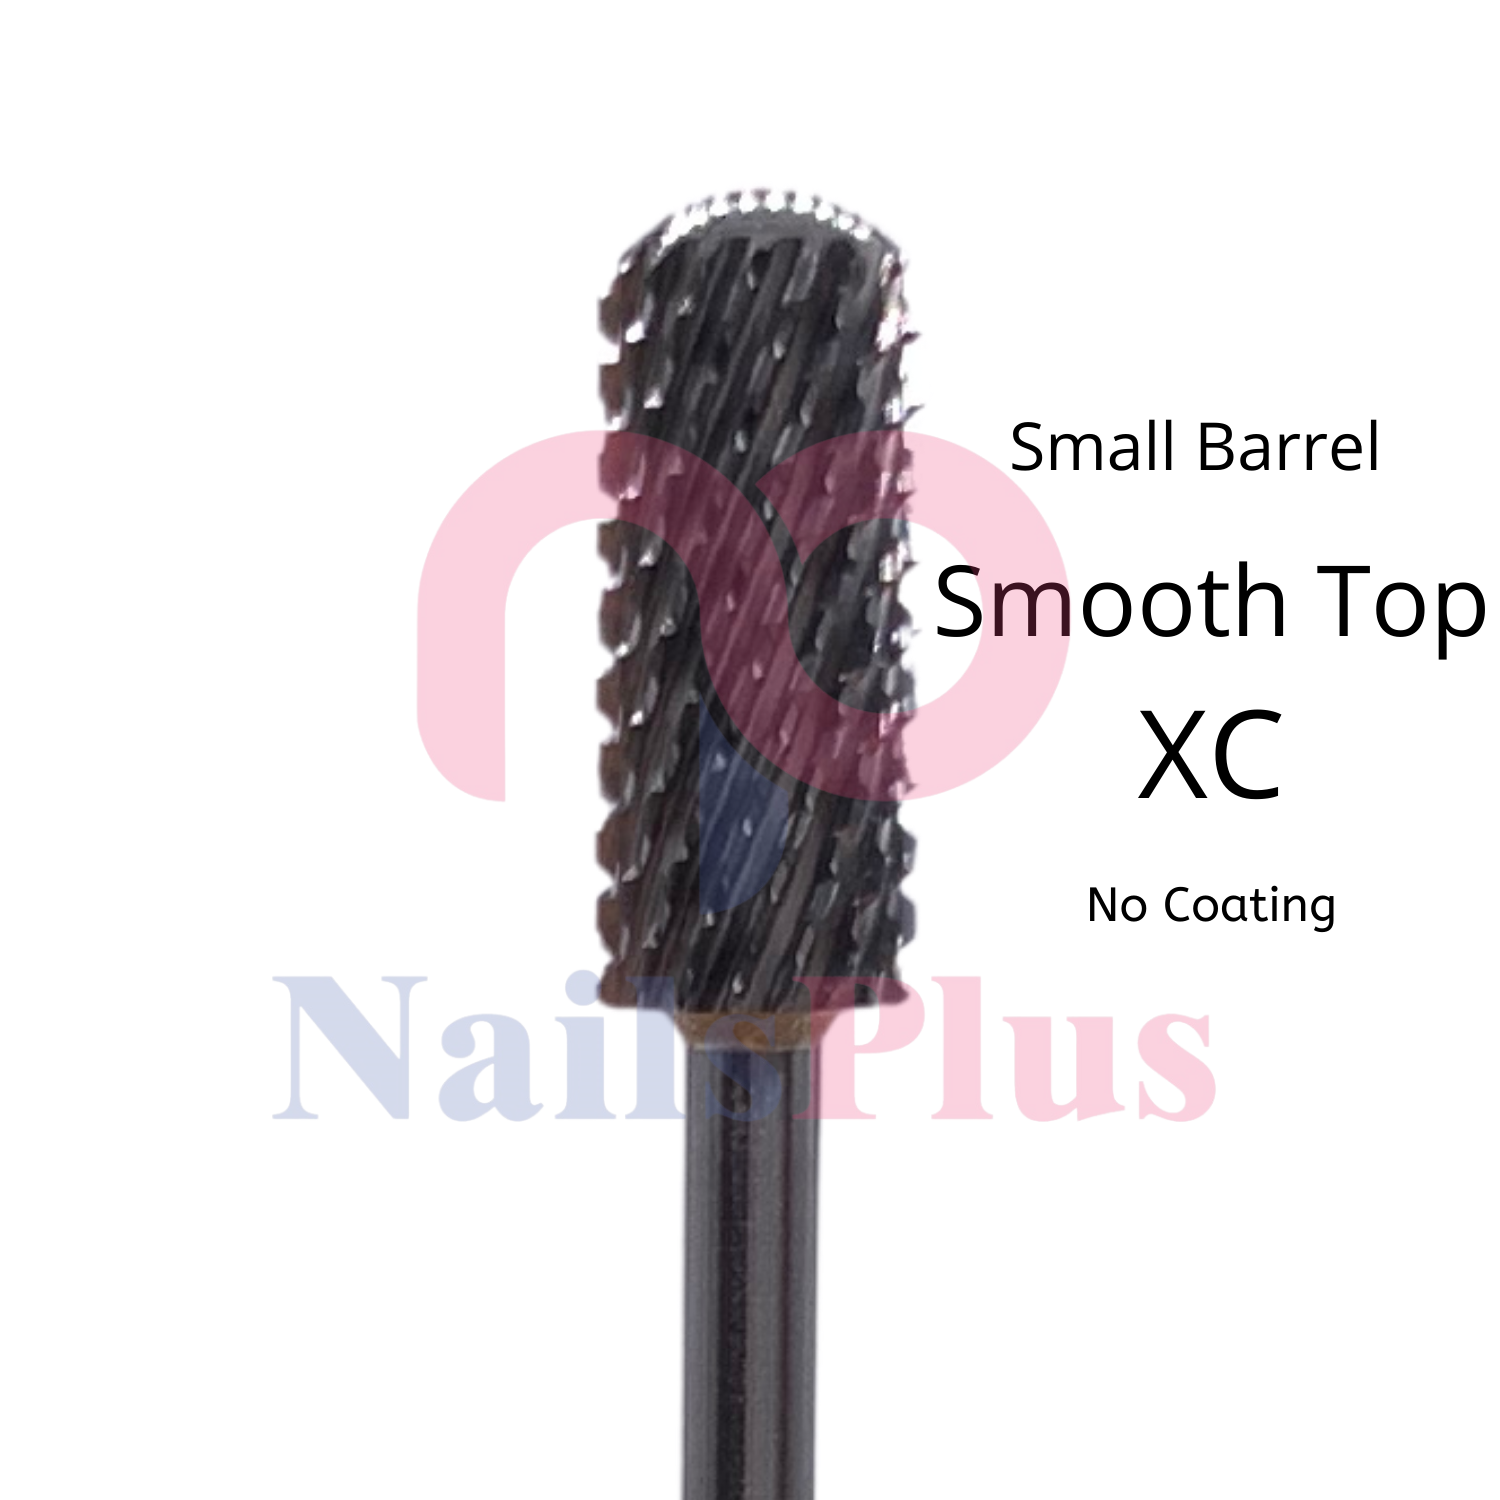 Small Barrel - Smooth Top  - XC - No Coating